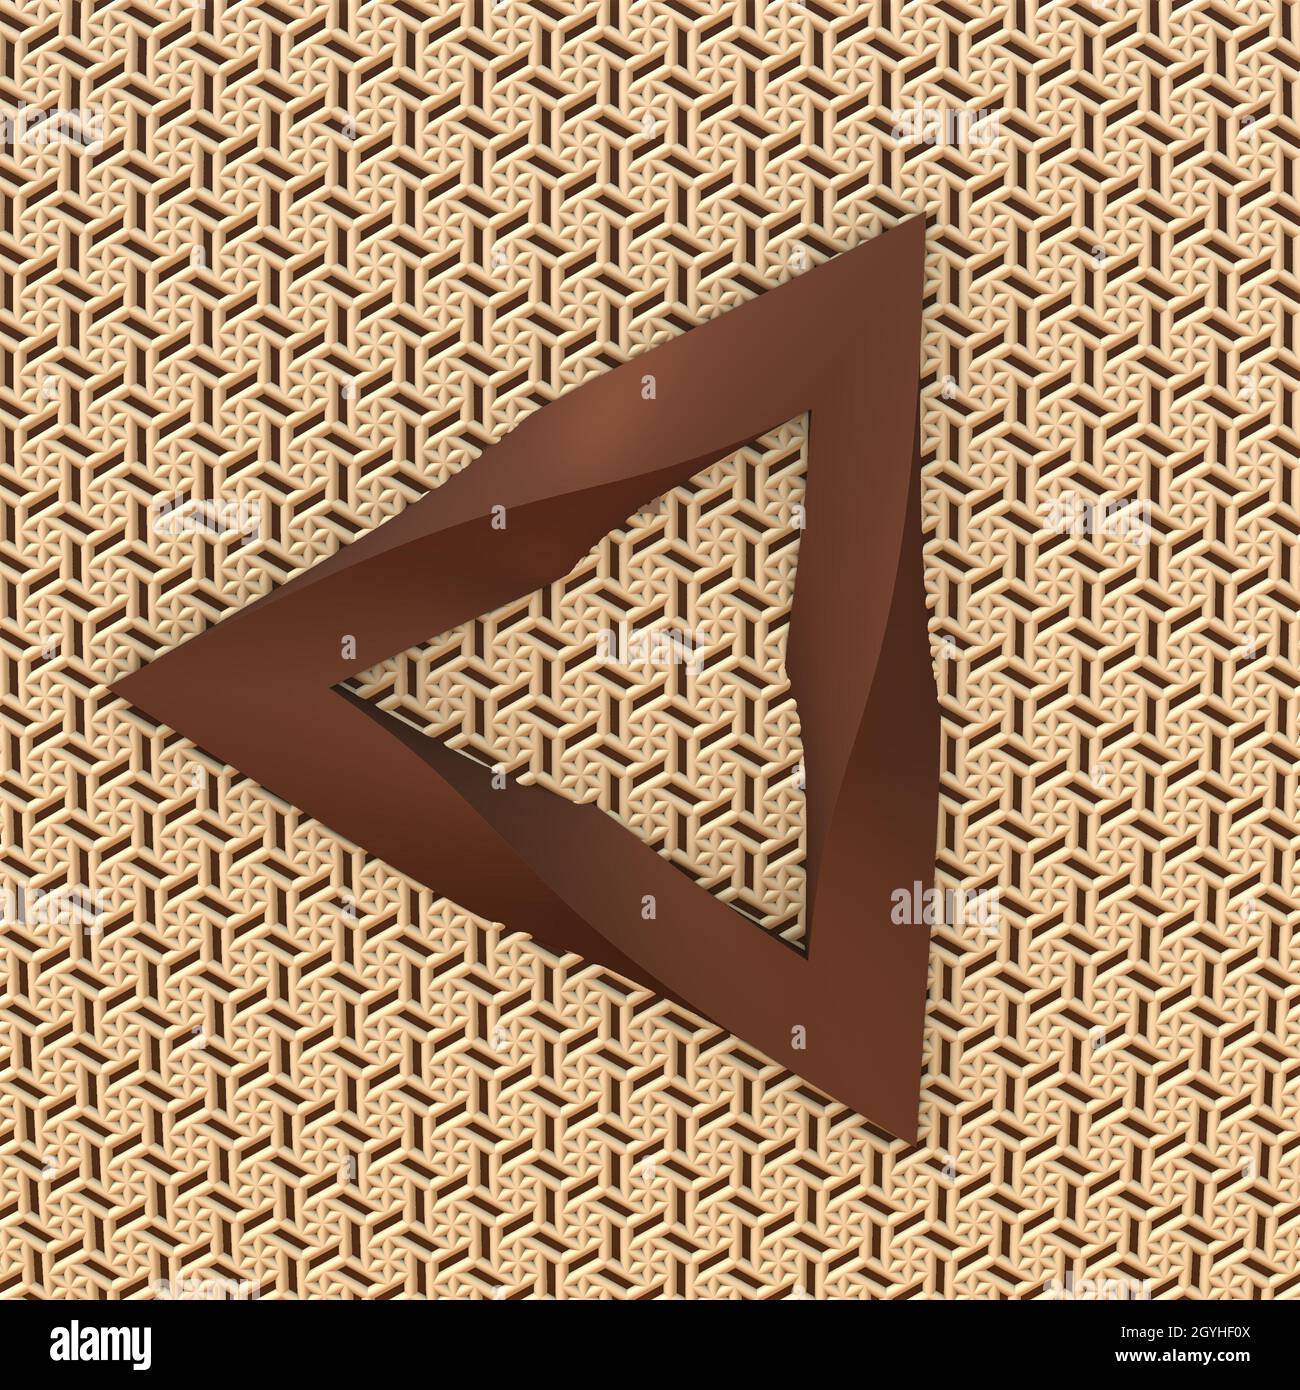 Moebius strib shaped triangle on patterned beige background Stock Photo